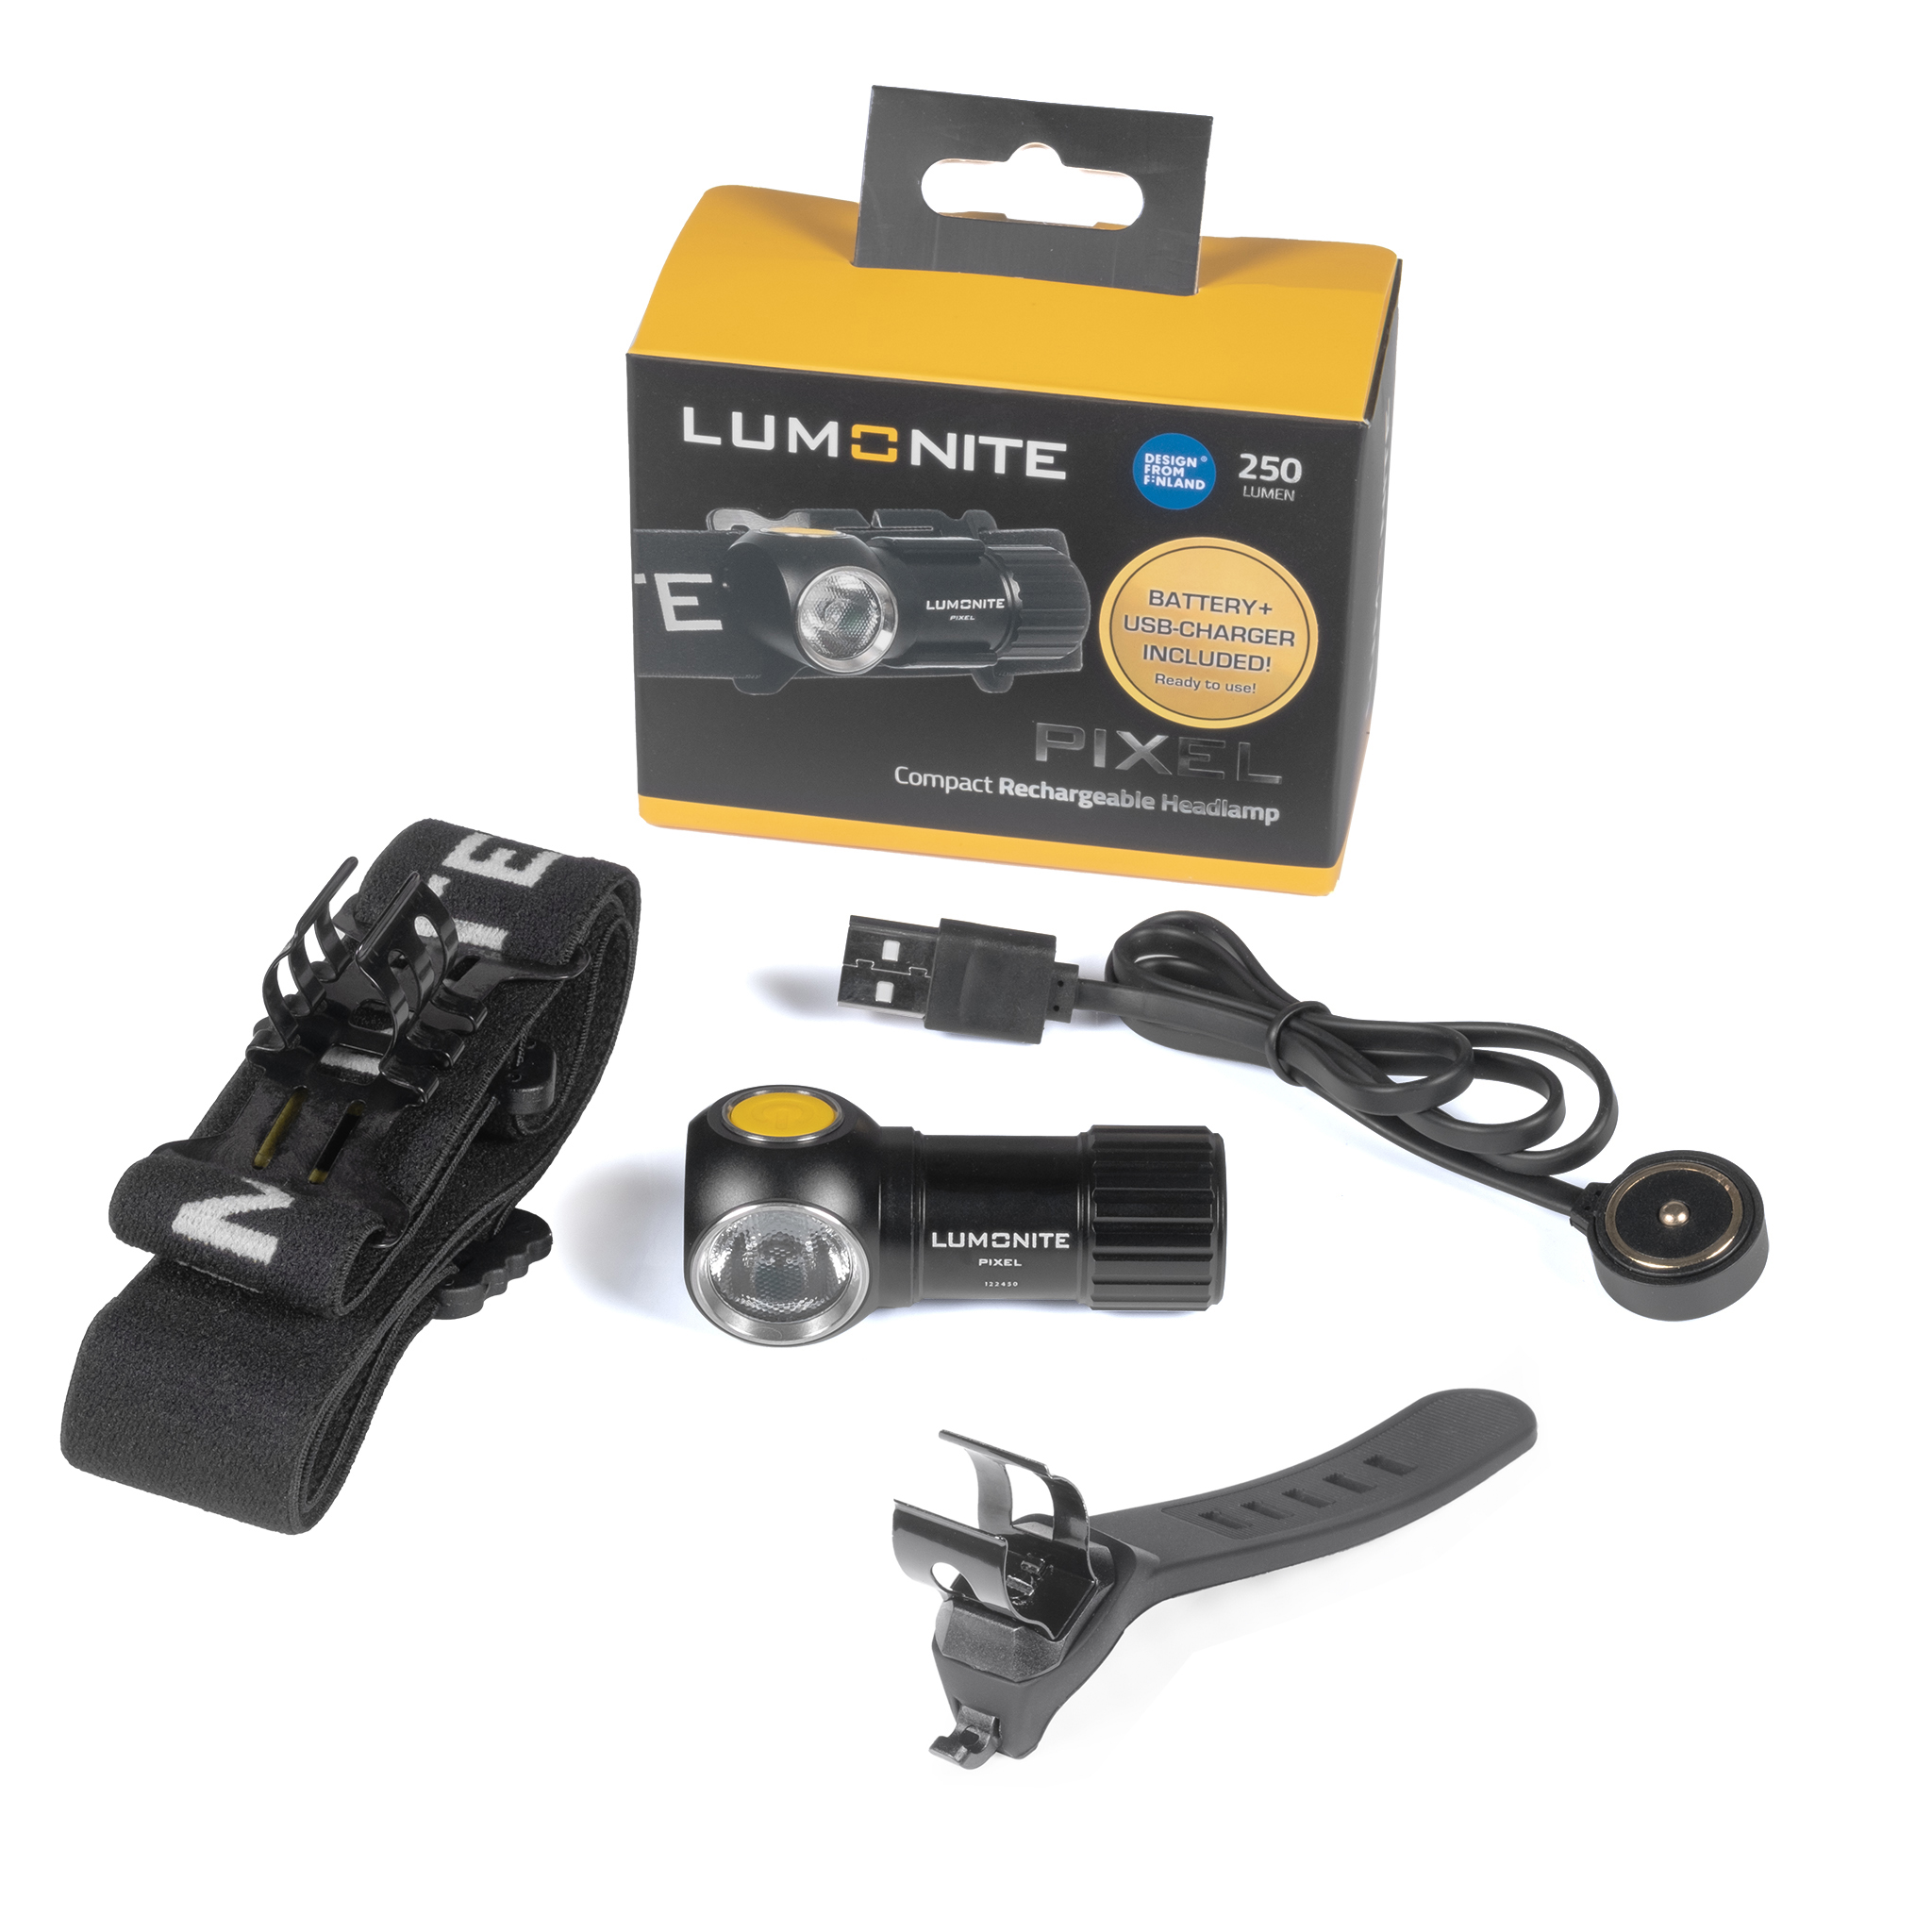 Pannlampa LUMONITE® Pixel, 250 lm, Lampa + Cykelfäste